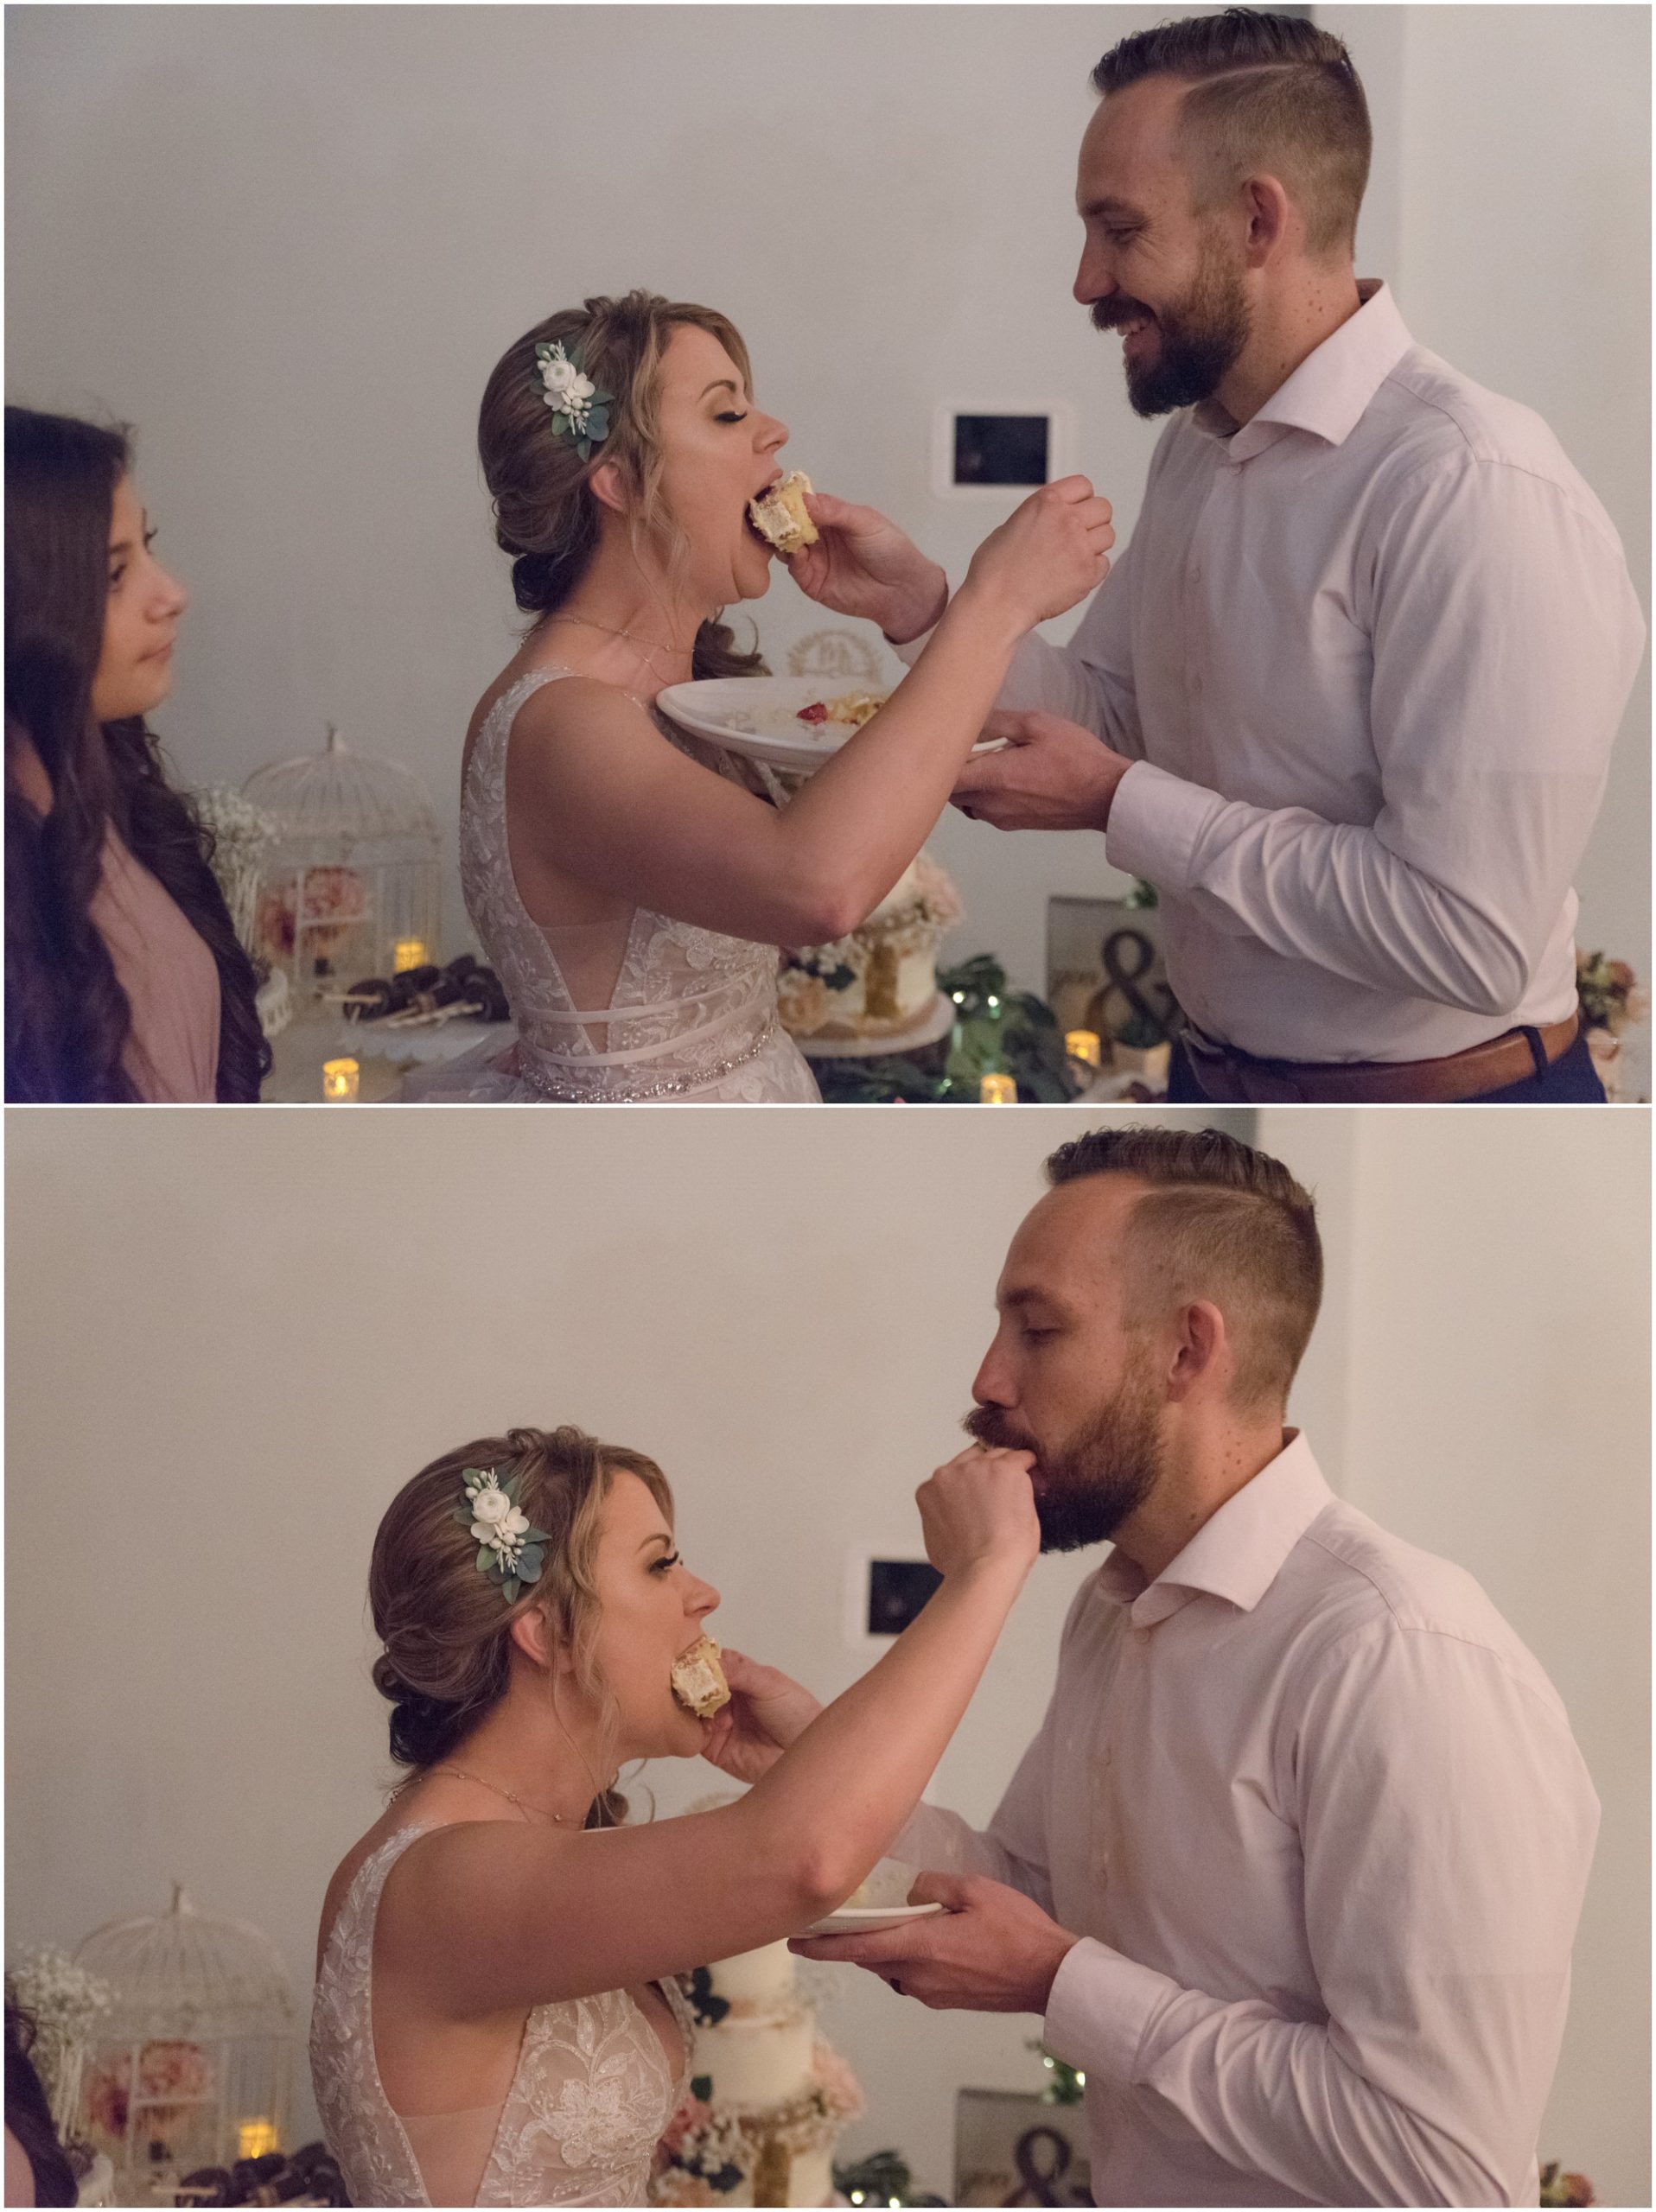 Bride and Groom Eating Wedding Cake